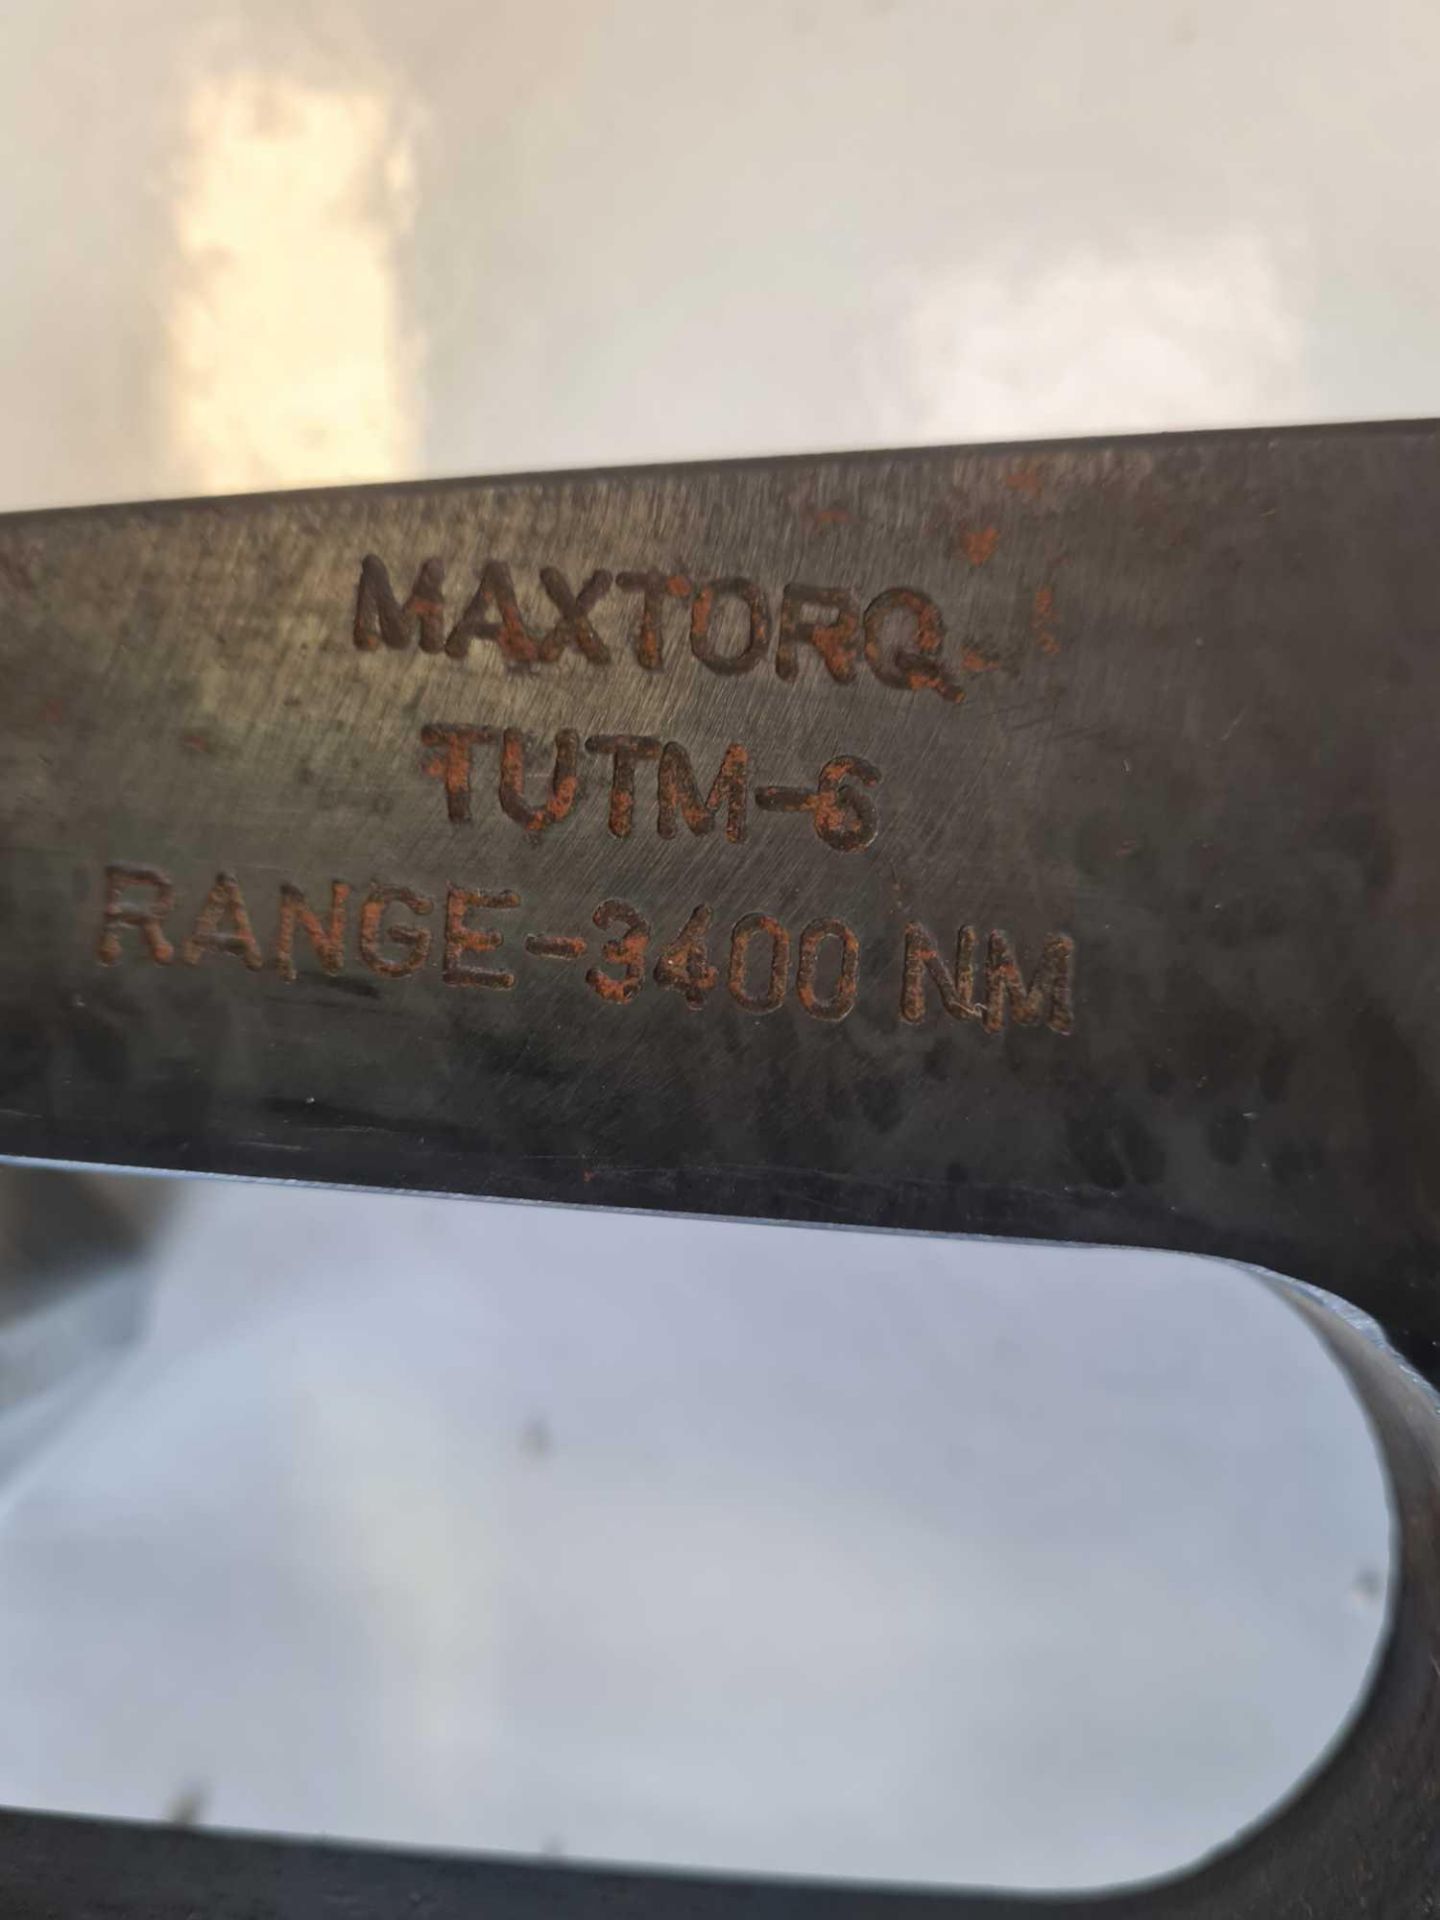 maxtorq torque multiplier - Image 3 of 3